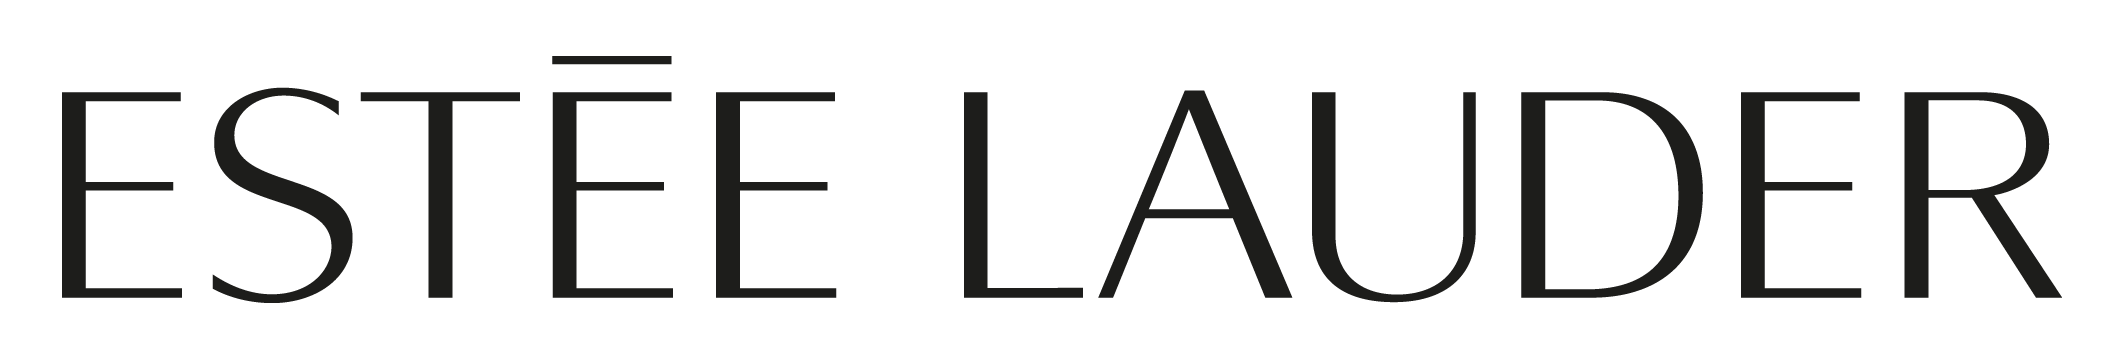 Estee Lauder Logo PNG Transparent.